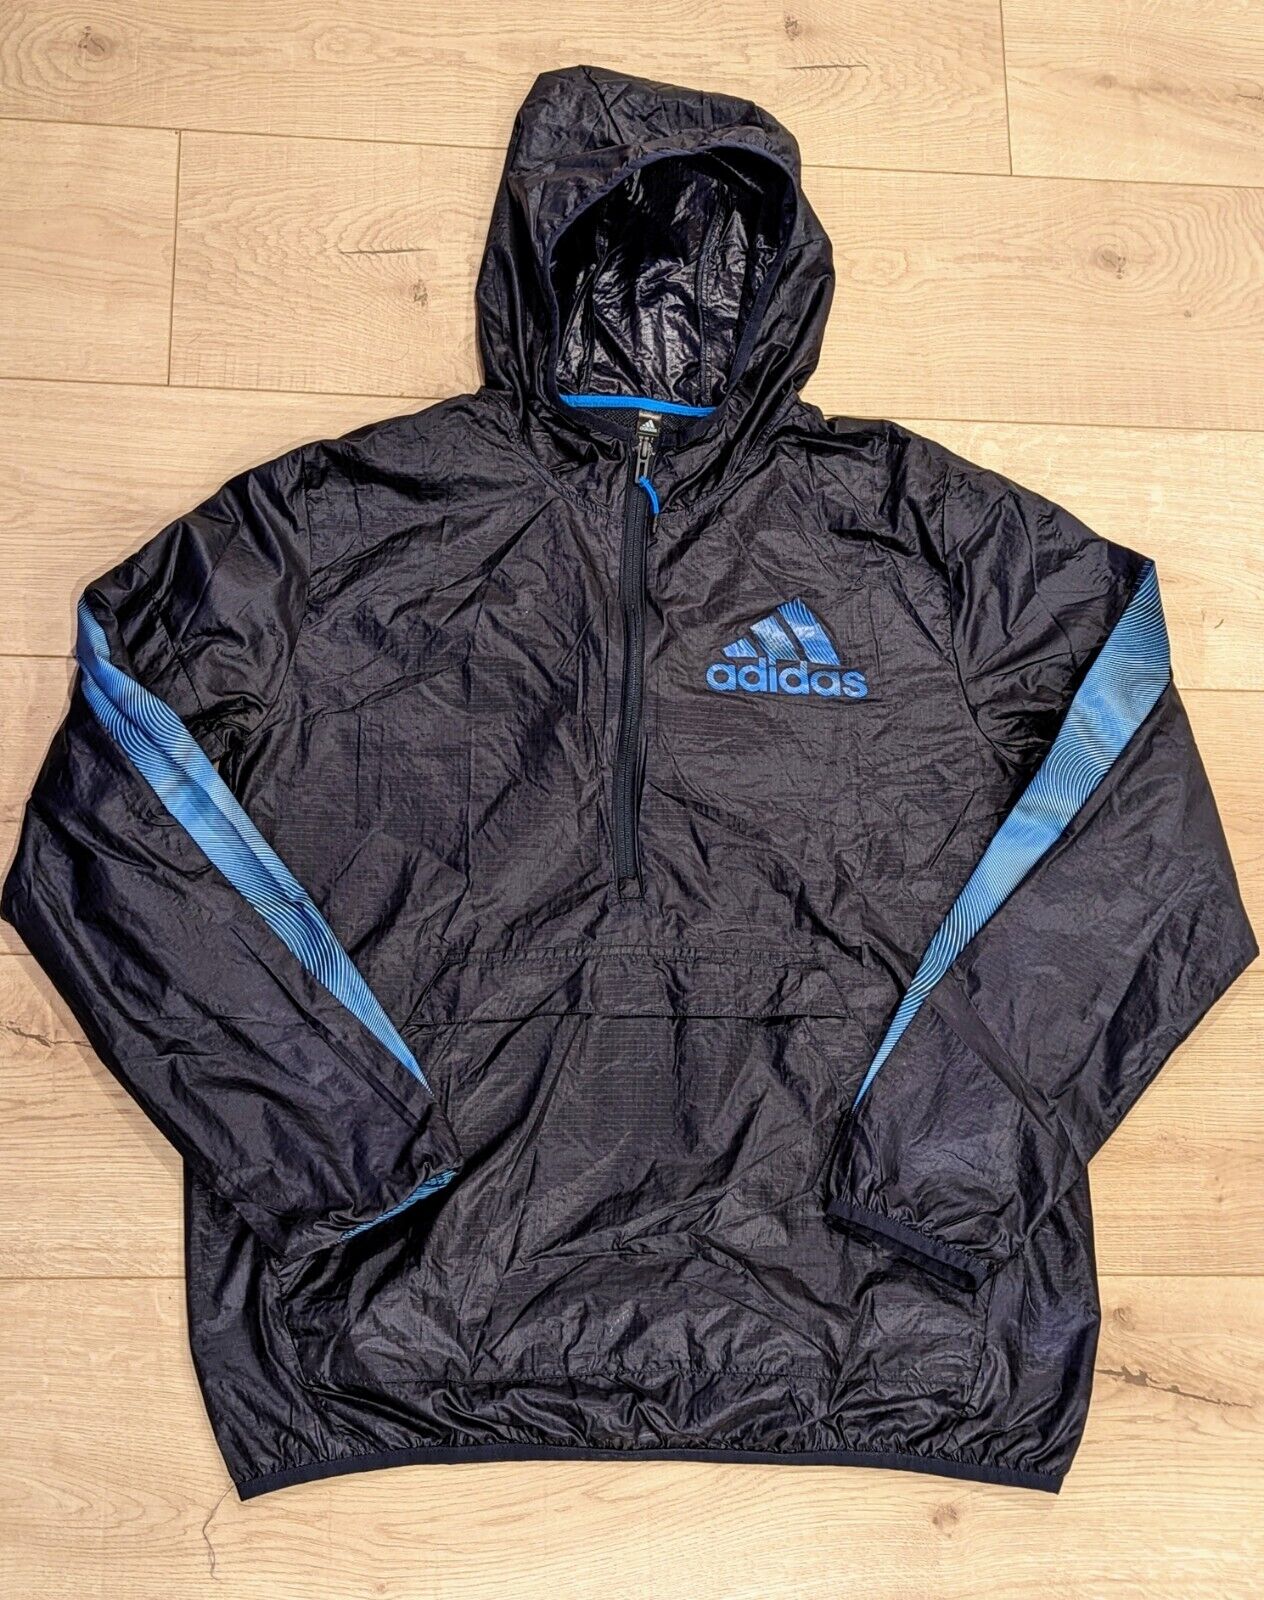 LN Mens Adidas Windbreaker Jacket Season WB Blue Black HD4335 Size Medium |  eBay